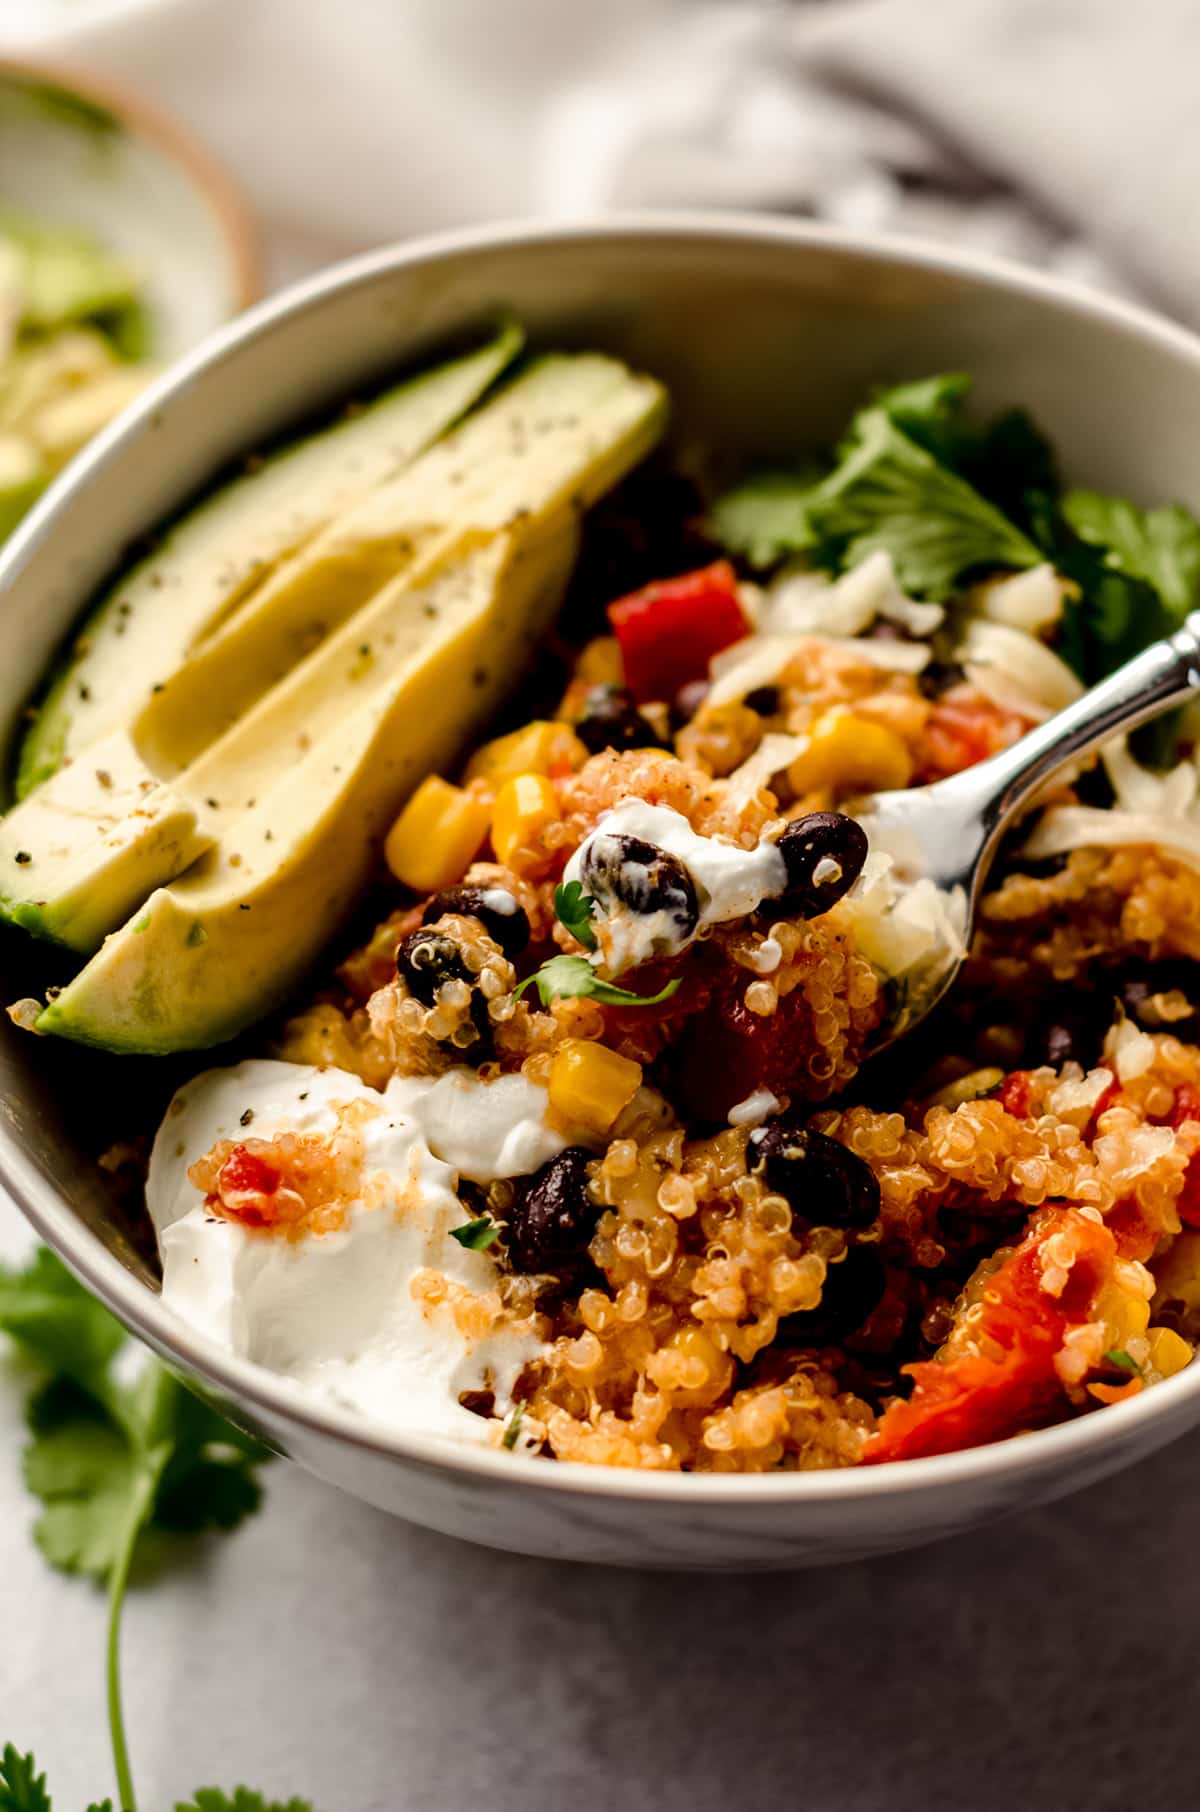 enchilada quinoa casserole in a bowl with sliced avocado, sour cream, and a fork